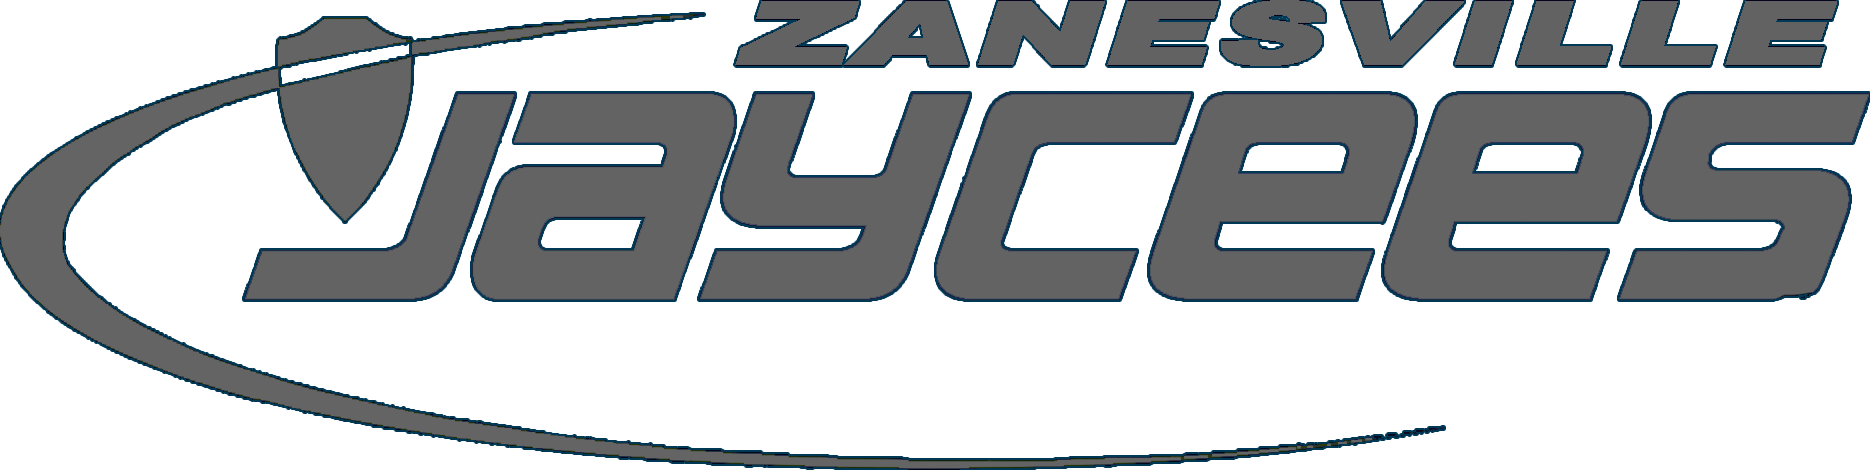 Zanesville Jaycess Community Benefit Organization